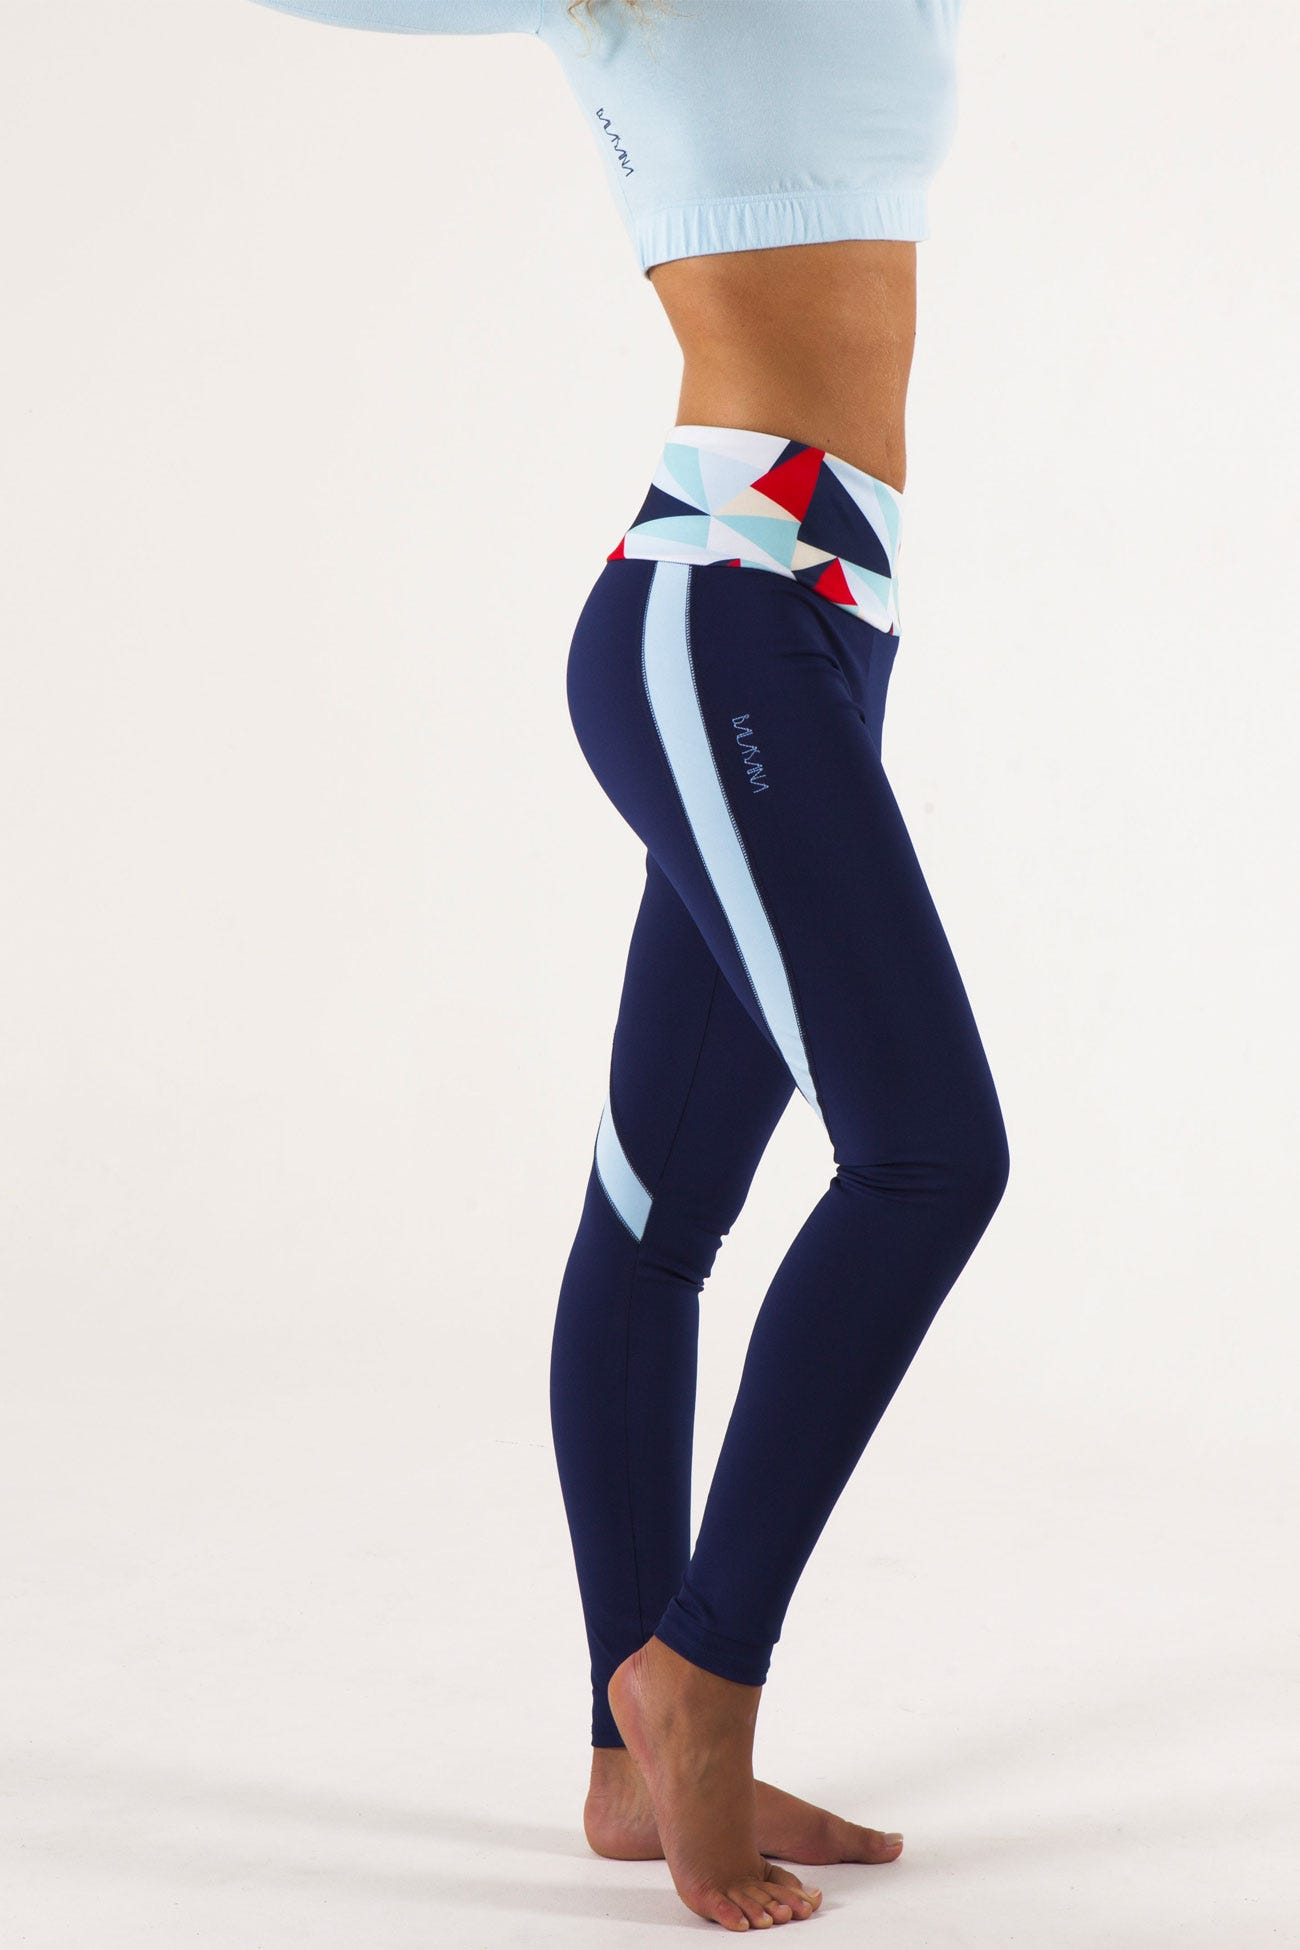 Legging Yoga Femme Store, 53% OFF | sportsregras.com